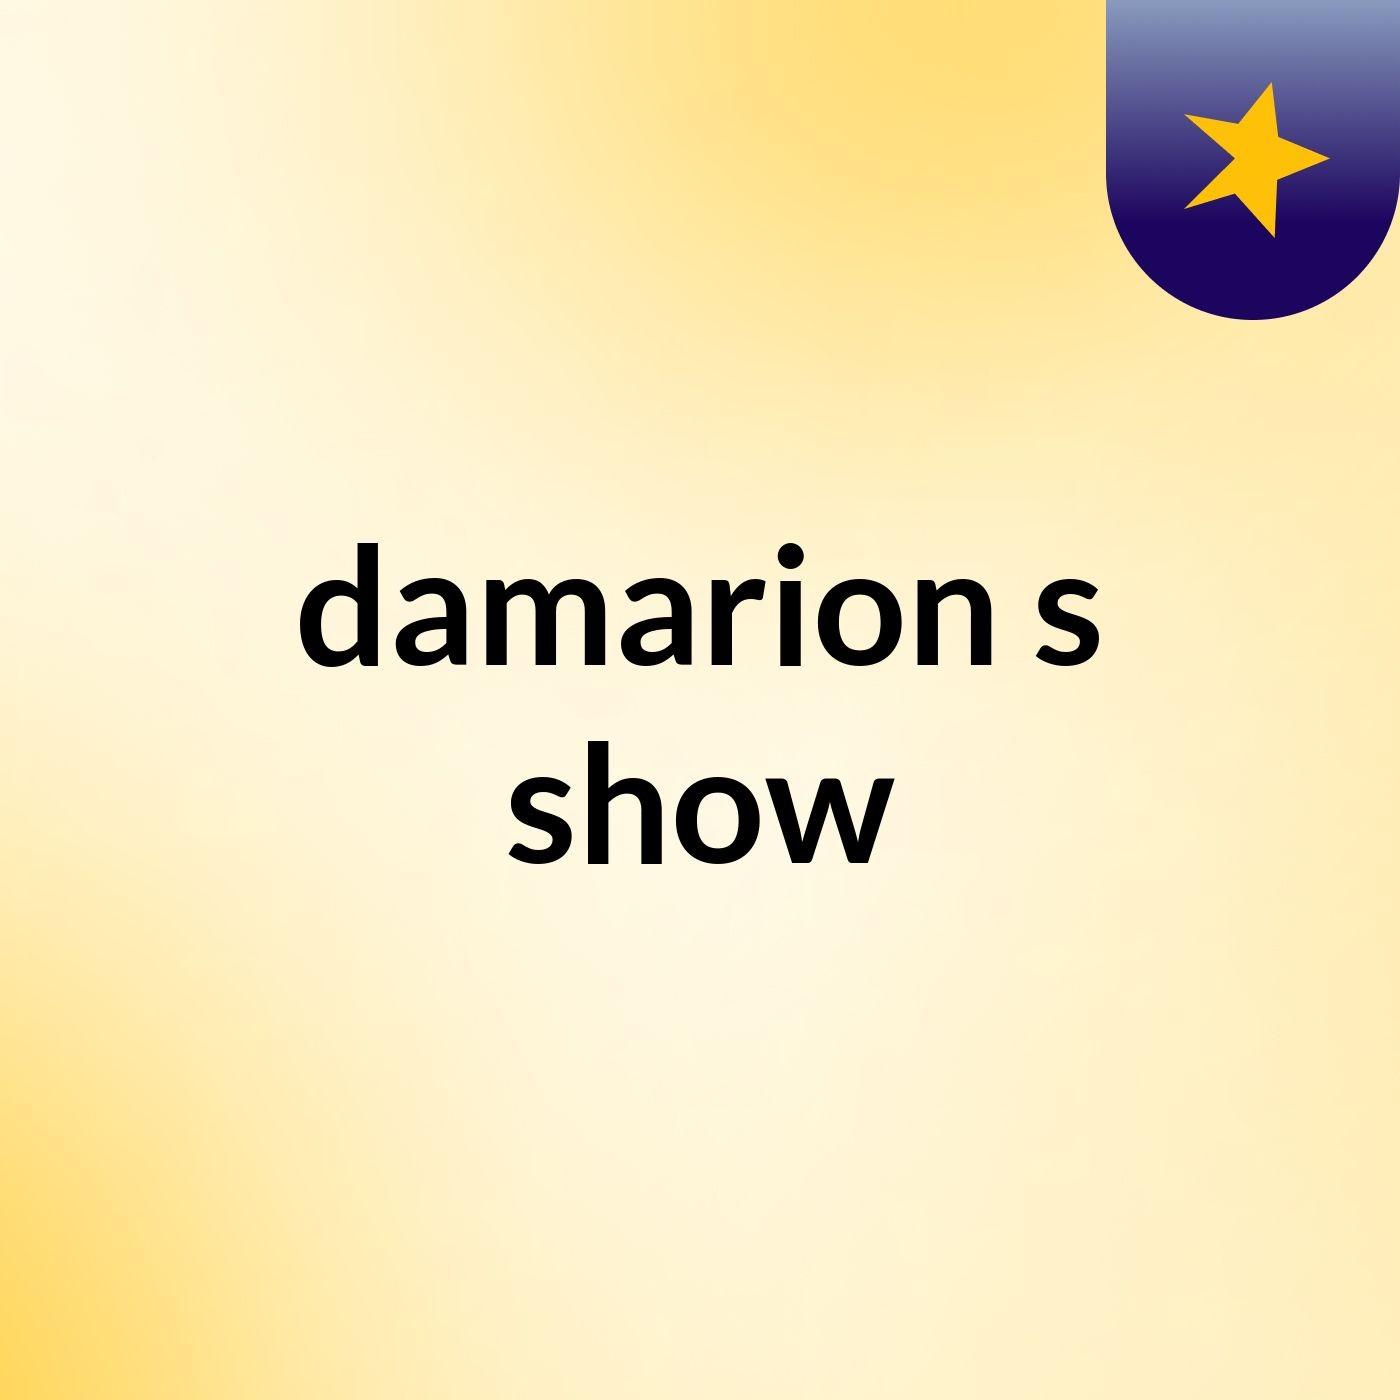 Episode 2 - damarion's show